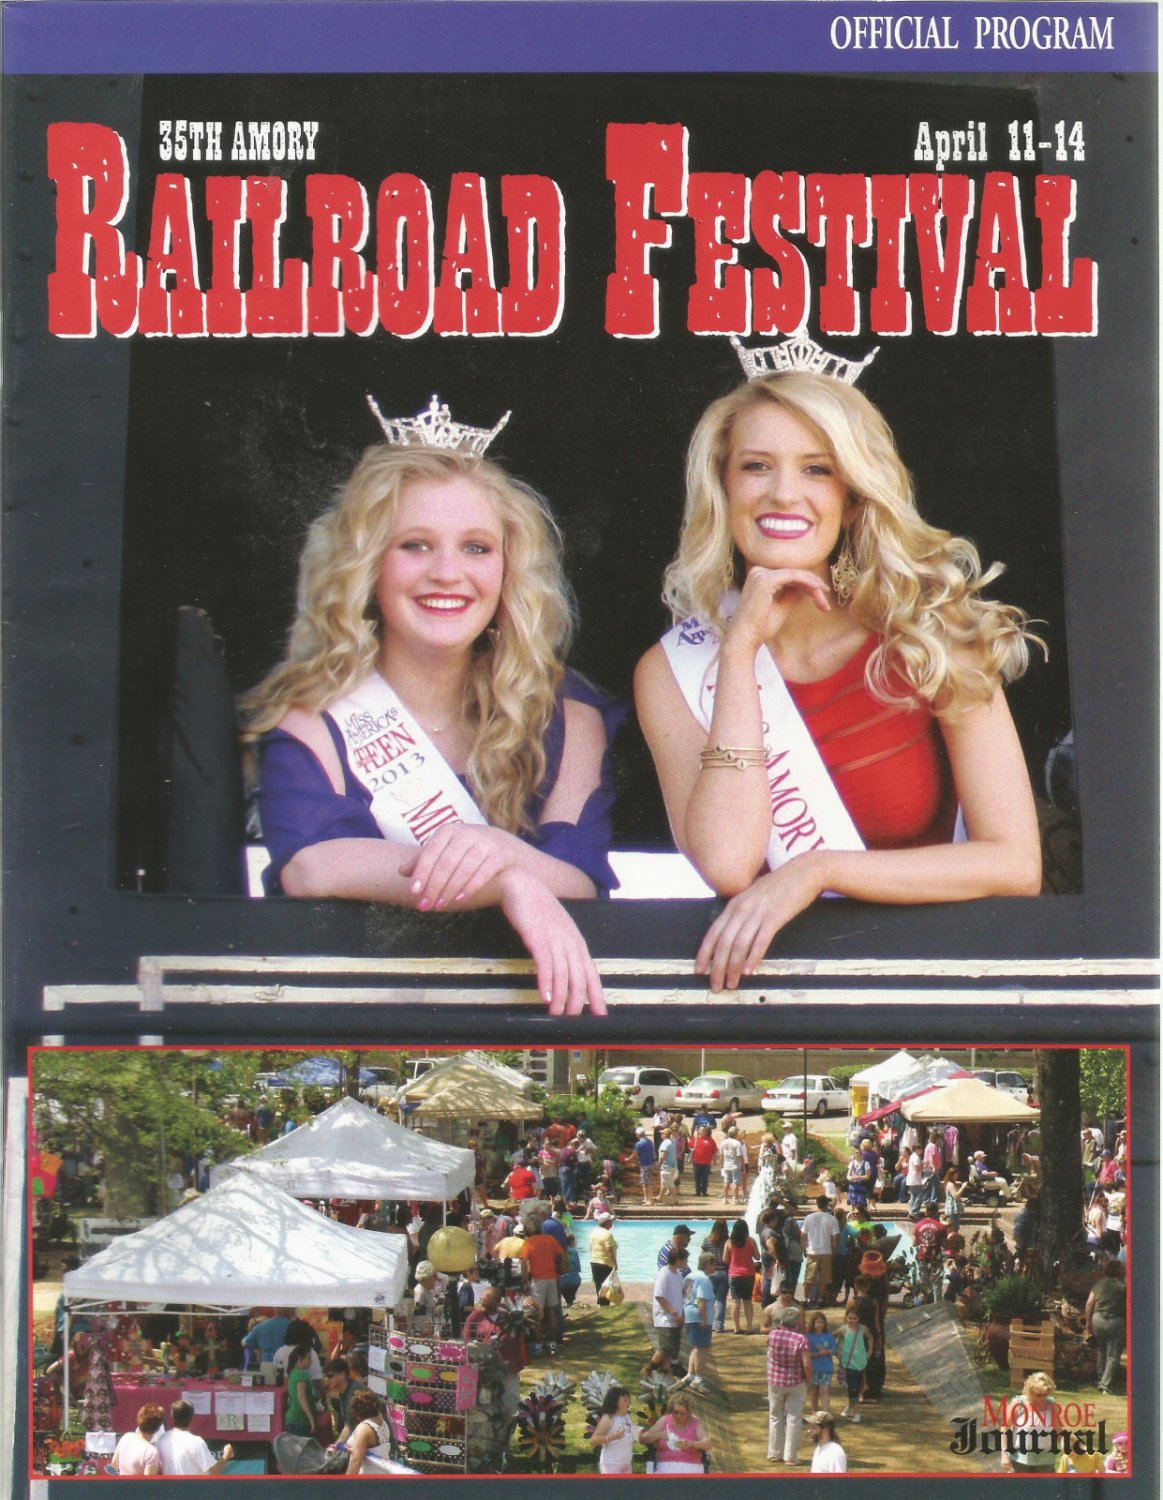 35th Amory Railroad Festival Official program 2013